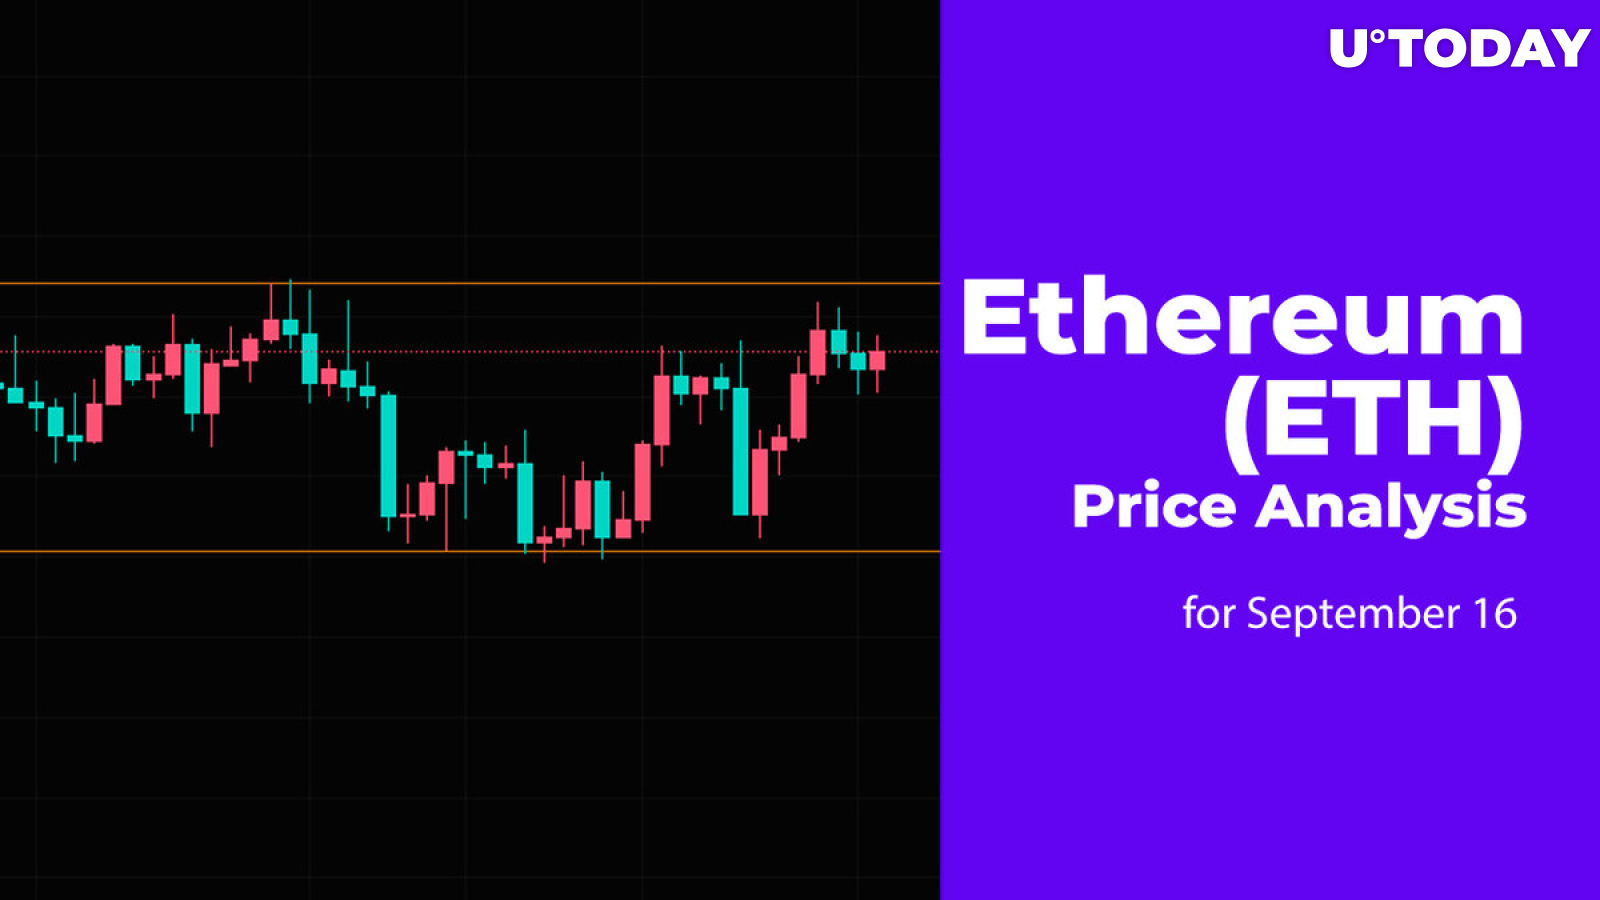 Ethereum (ETH) Price Analysis for September 16